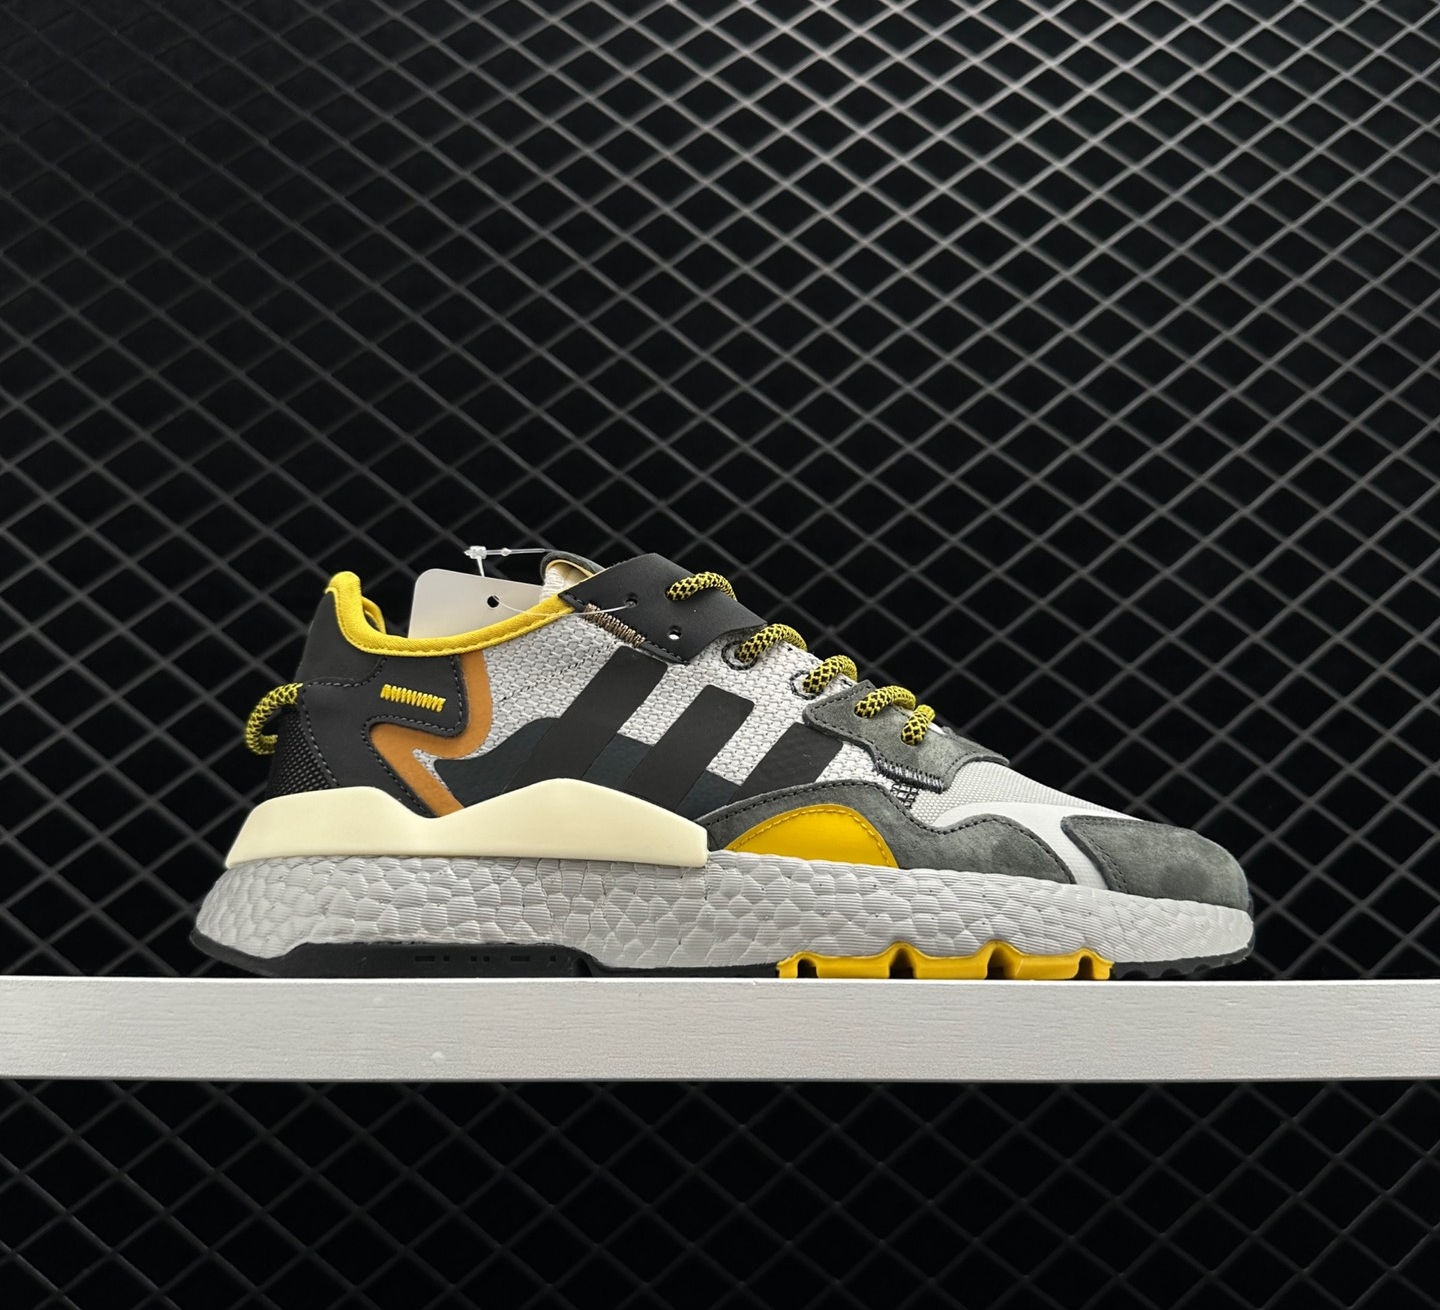 Adidas Originals Nite Jogger Gray Yellow GY0019 - Stylish and Comfortable Sneakers